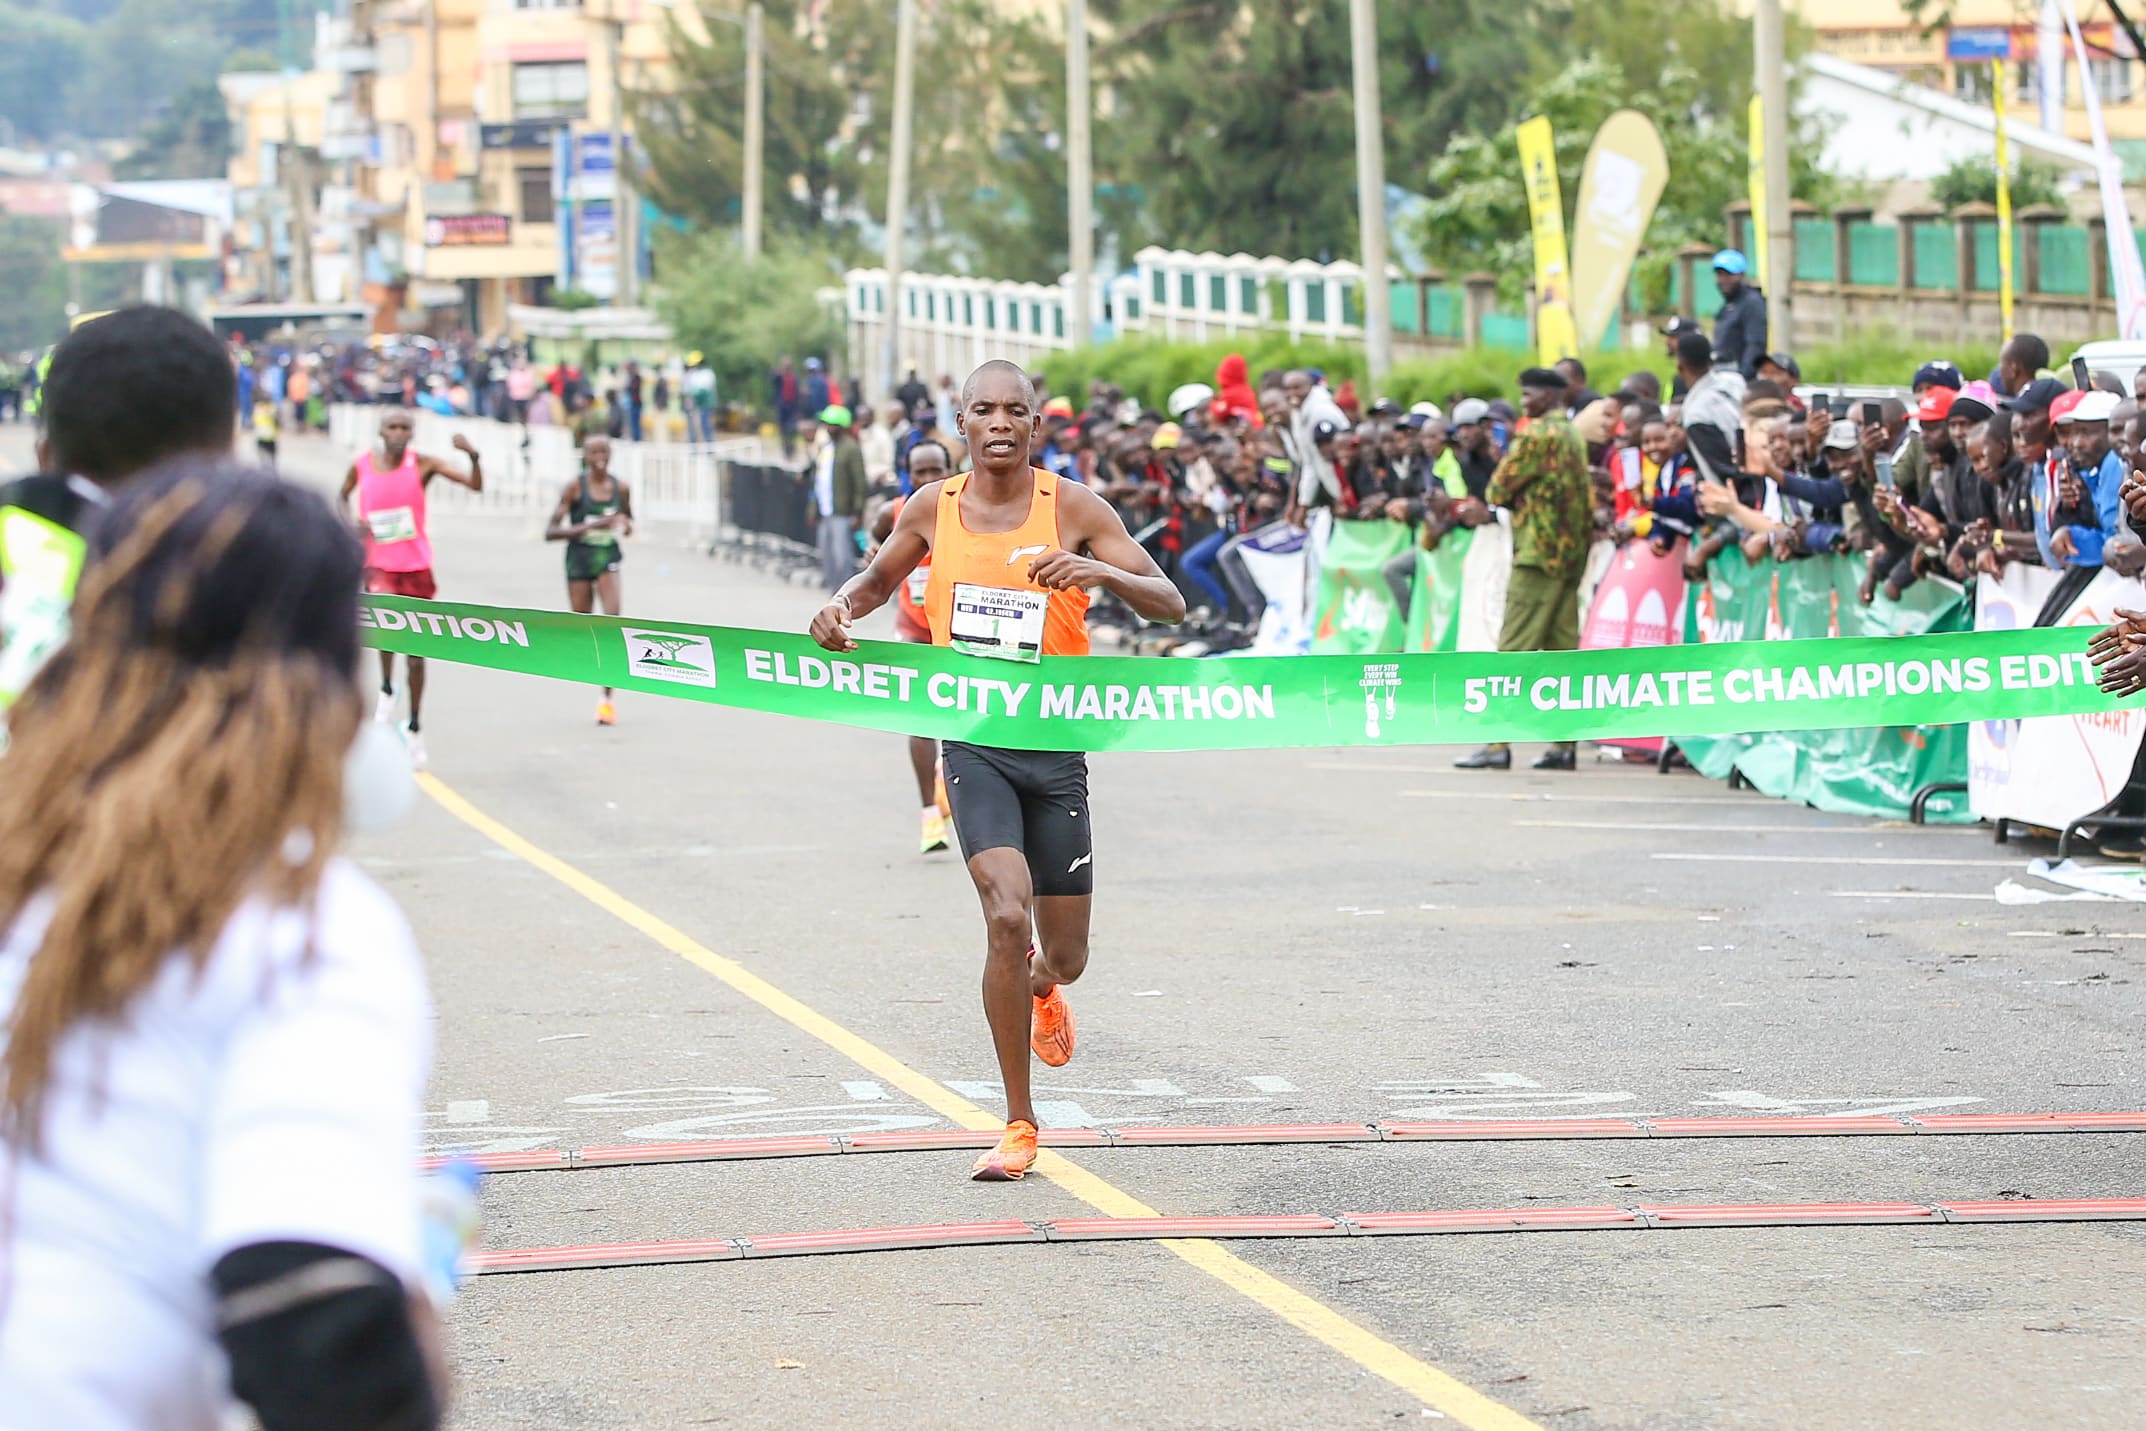 Rotich, Jepkemoi win fifth edition of Eldoret City Marathon